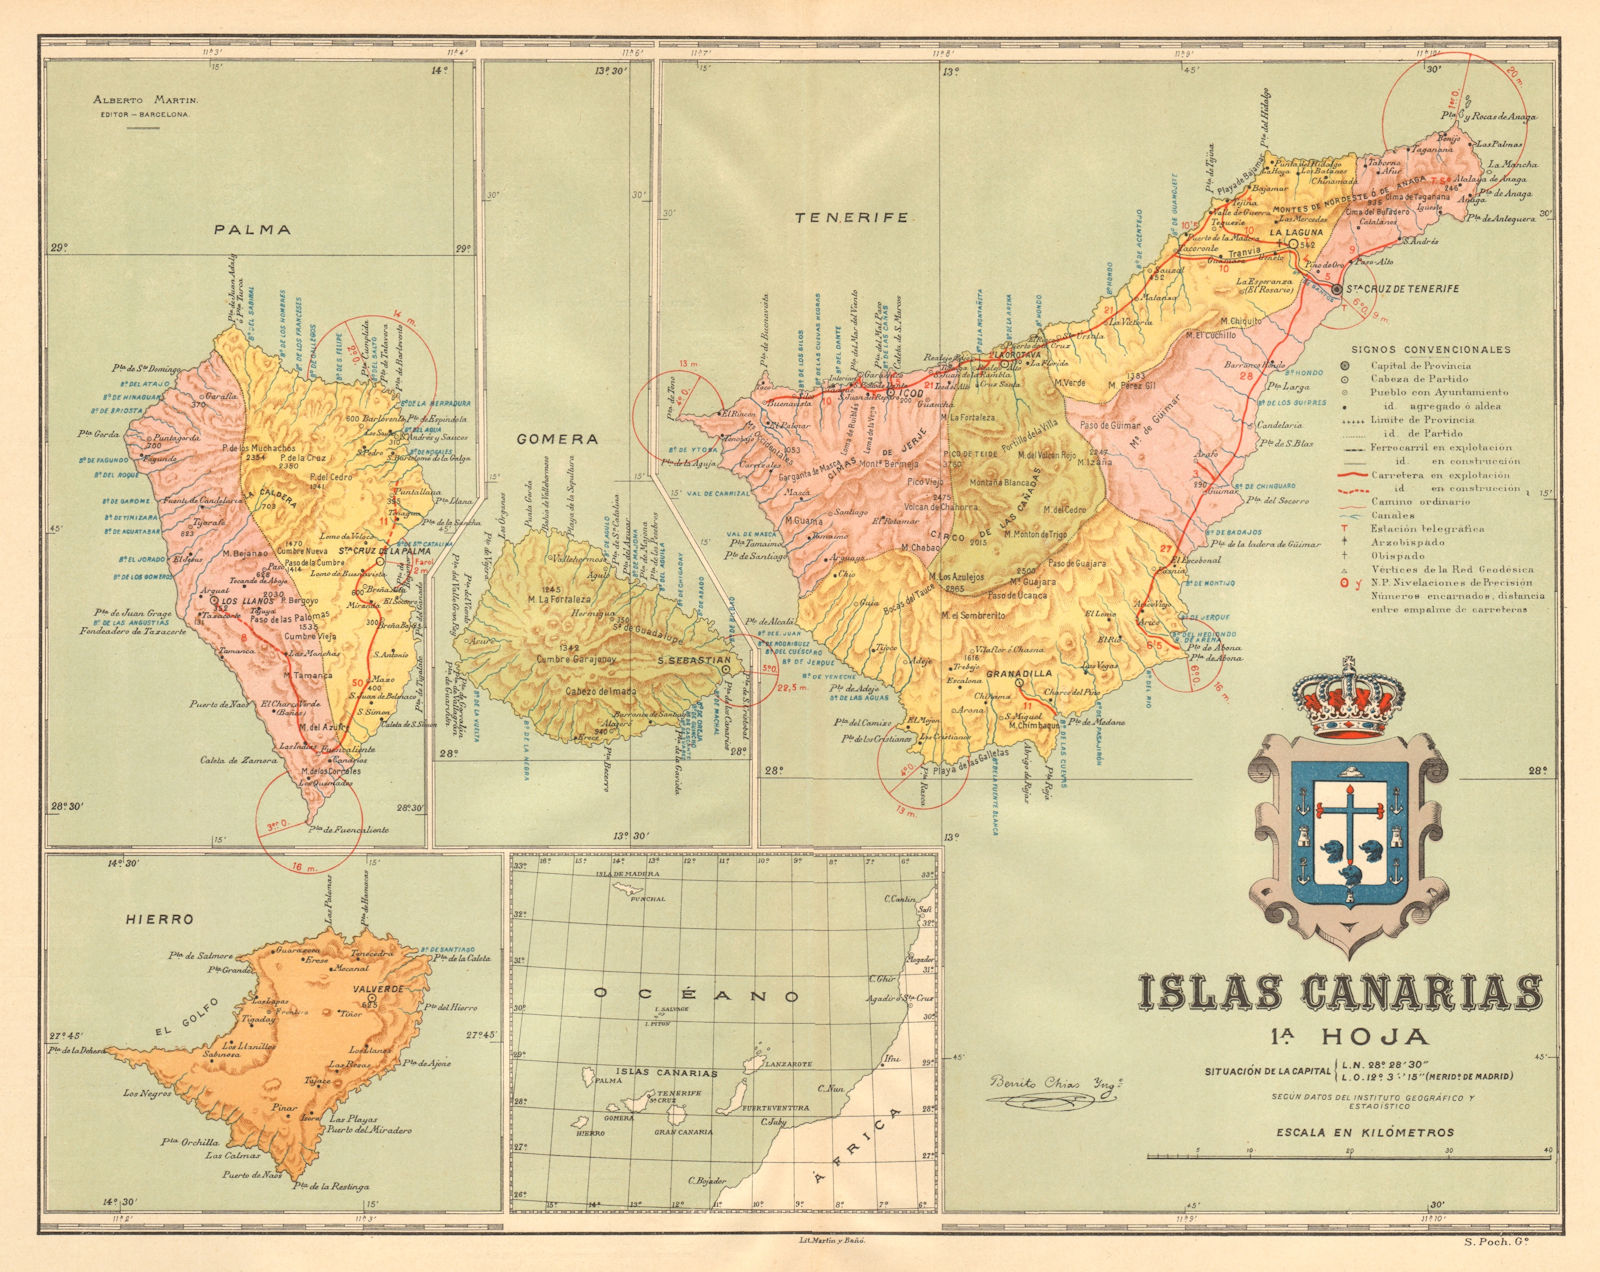 ISLAS CANARIAS Tenerife Palma Hierro Gomera. Canary Islands. MARTIN c1911 map